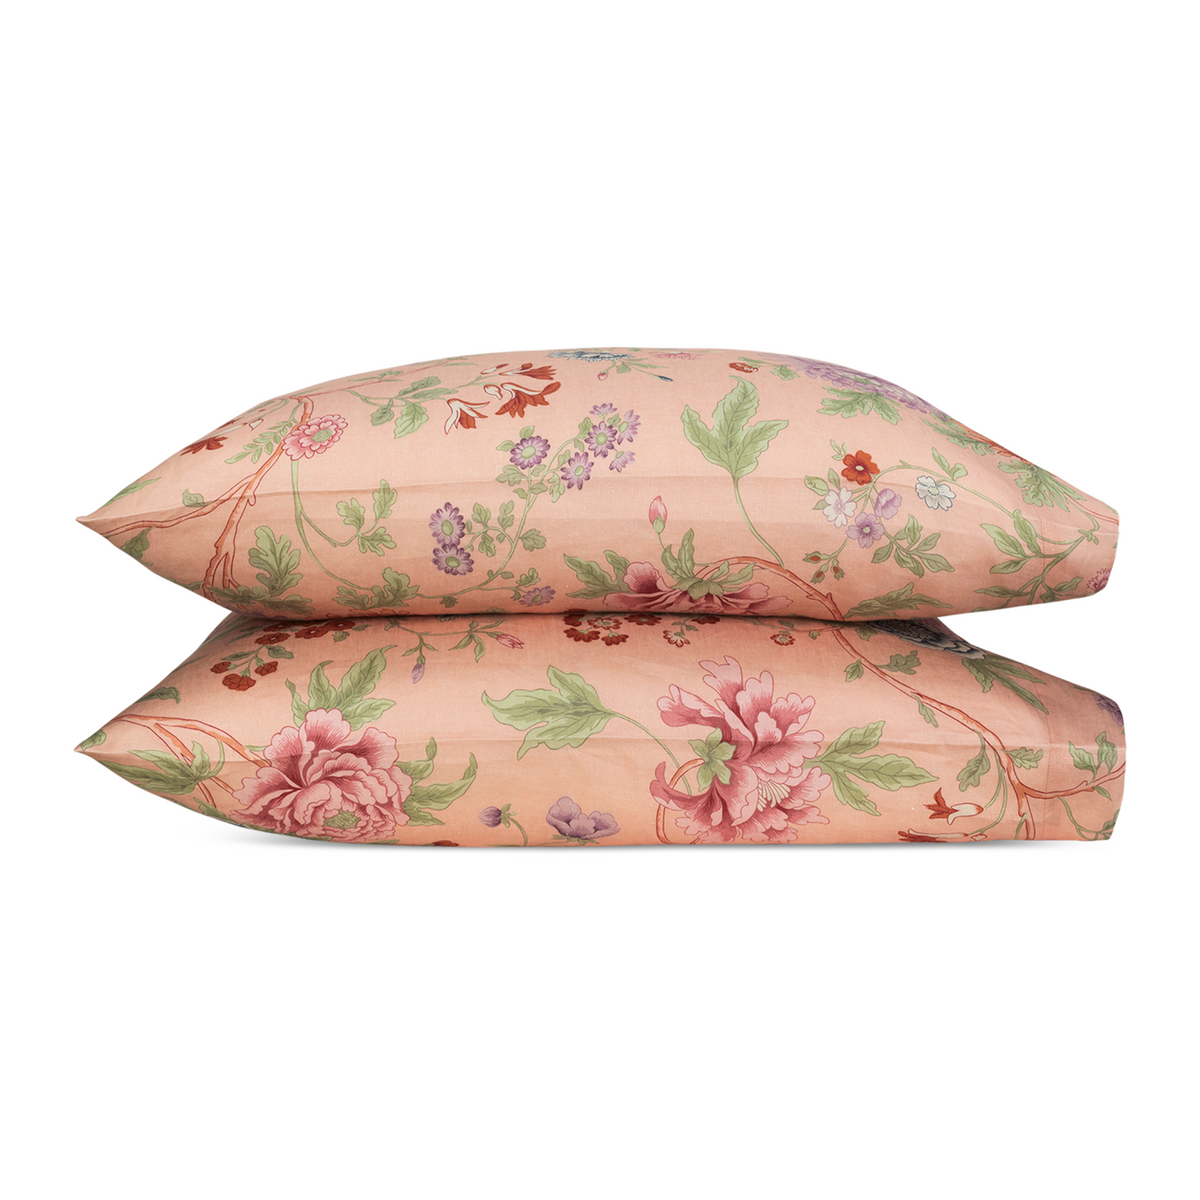 Pair of Pillowcases of Matouk Schumacher Simone Linen Bedding Apricot Color